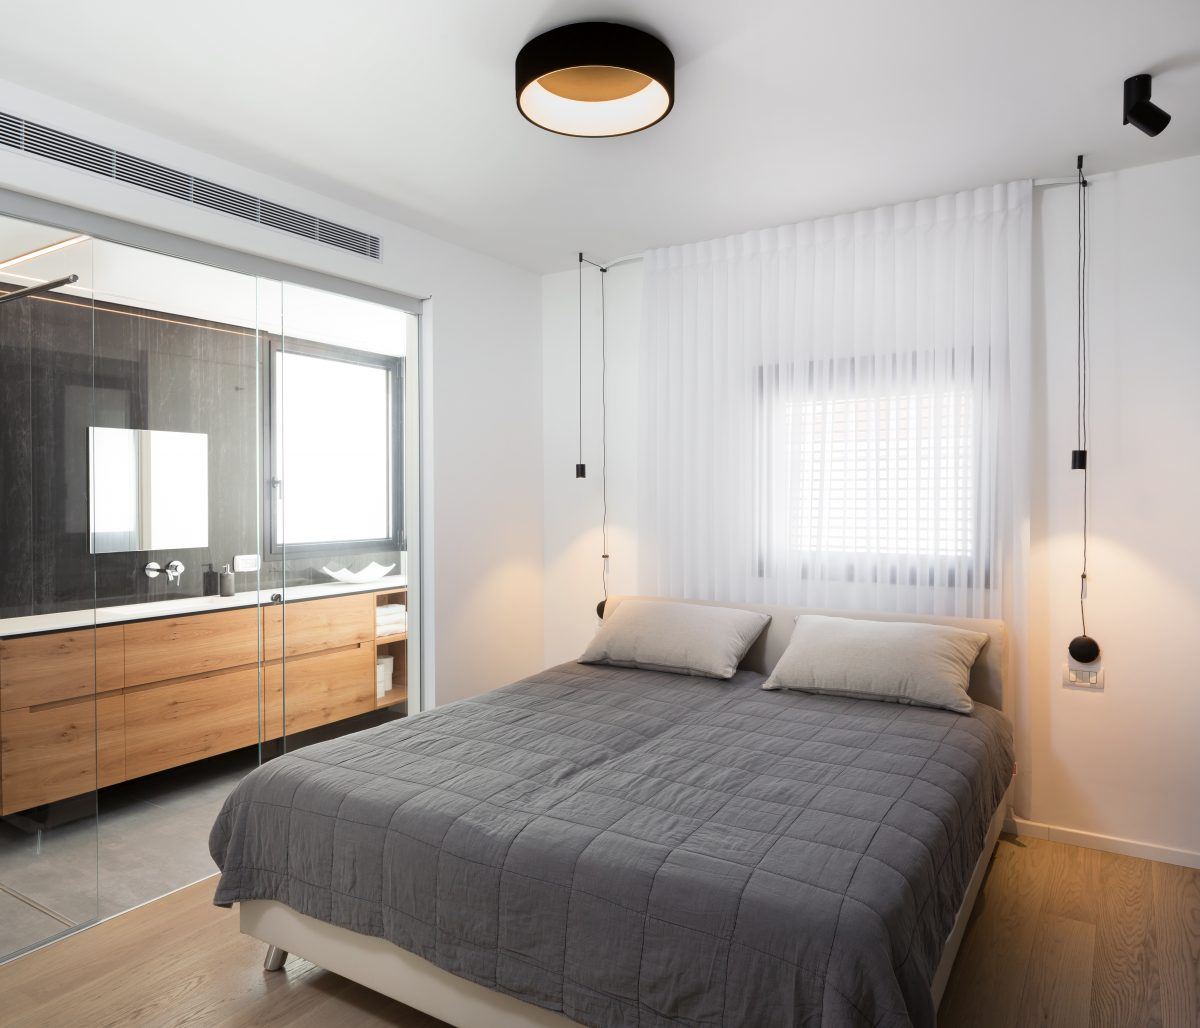 Penthouse apartment – Ra'anana התאורה בחדר השינה עוצבה על ידי דורי קמחי